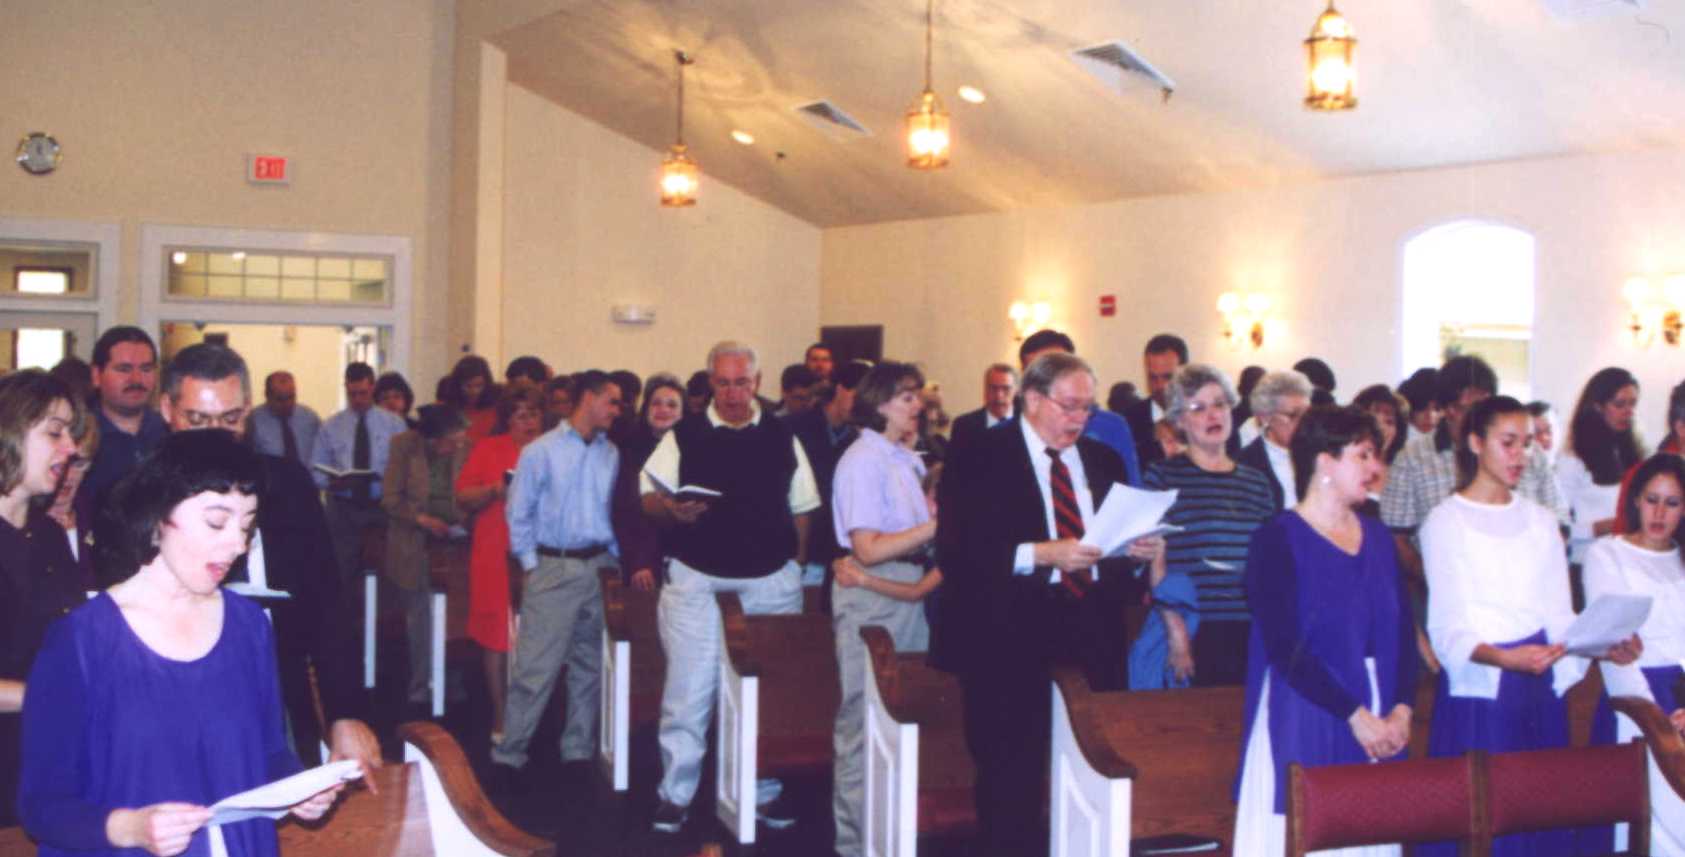 congregation